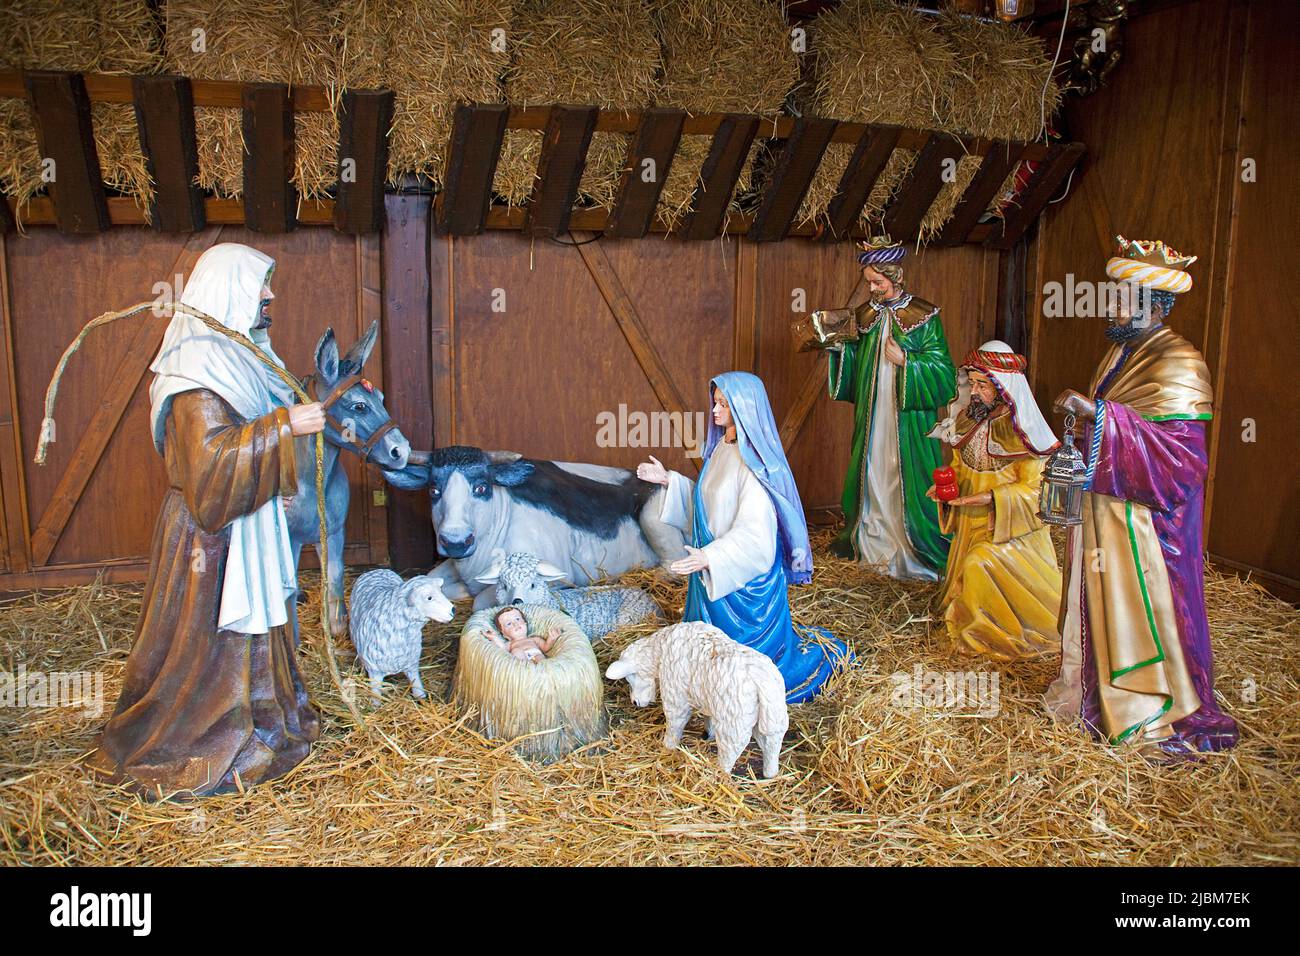 Birth of jesus christ as a nativity scene, Christmas market in Trier, Rhineland-Palatinate, Germany, Europe Stock Photo